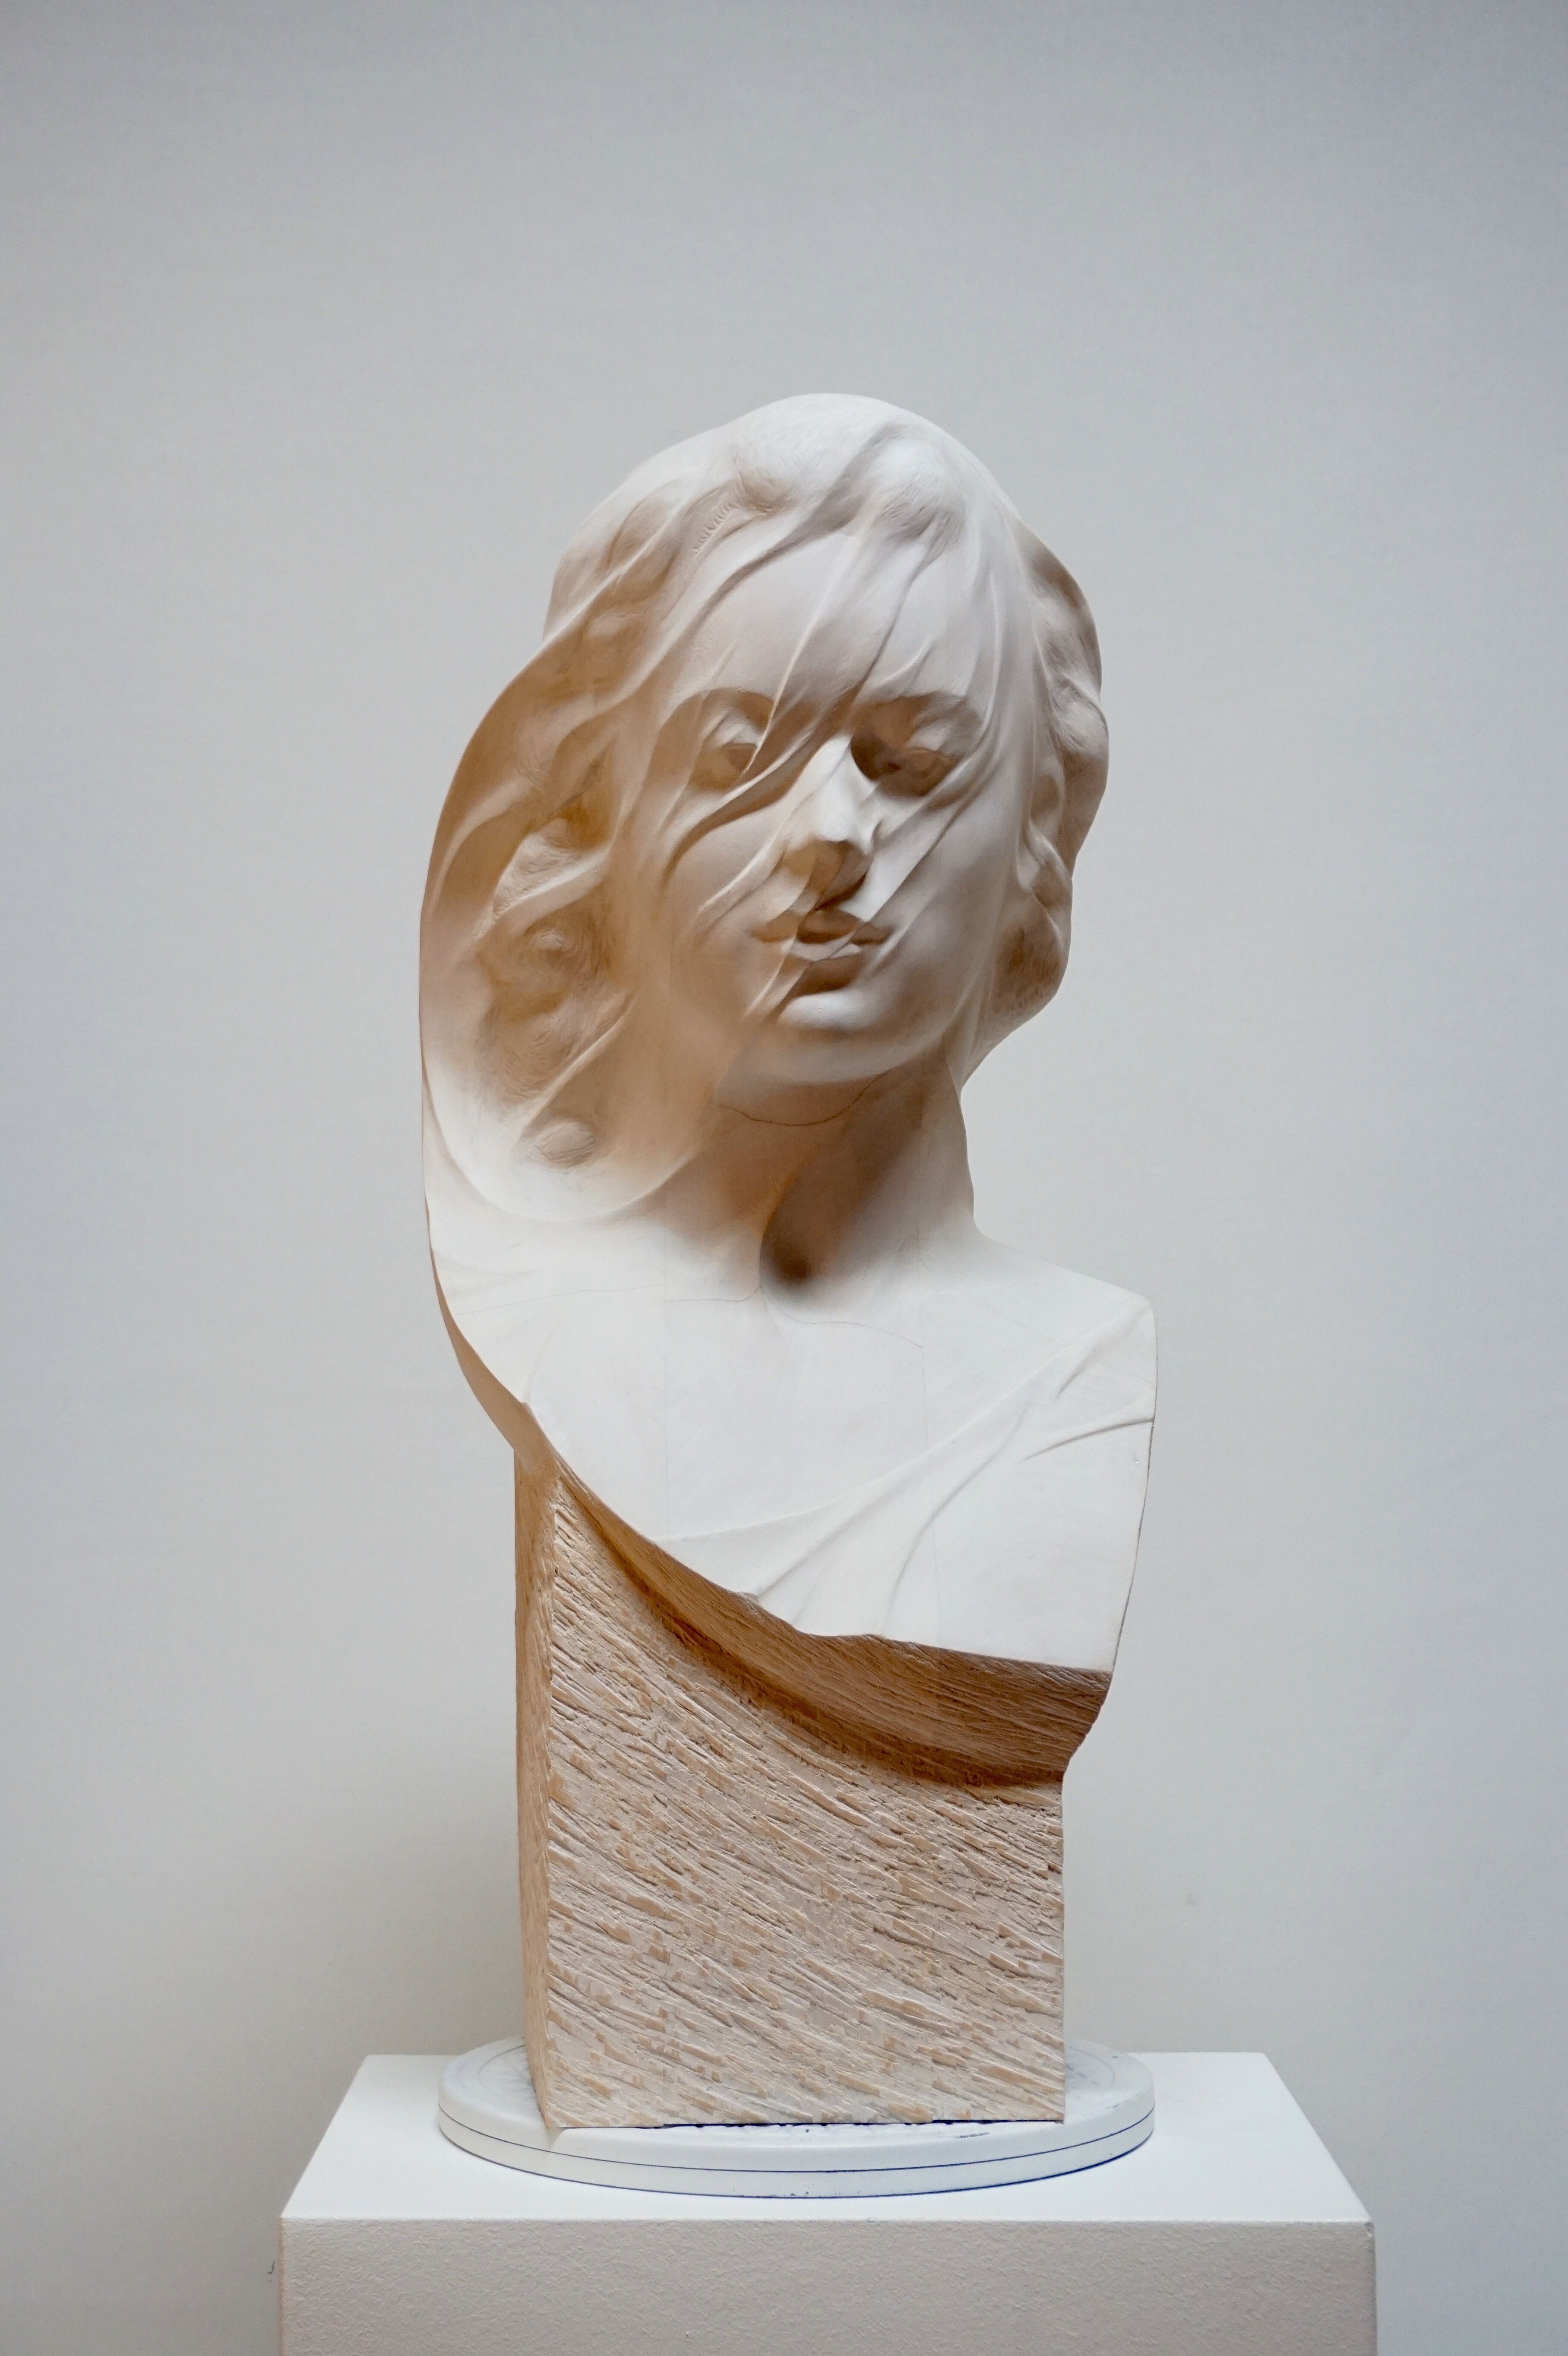 Sculpture "Beloved" (2010)